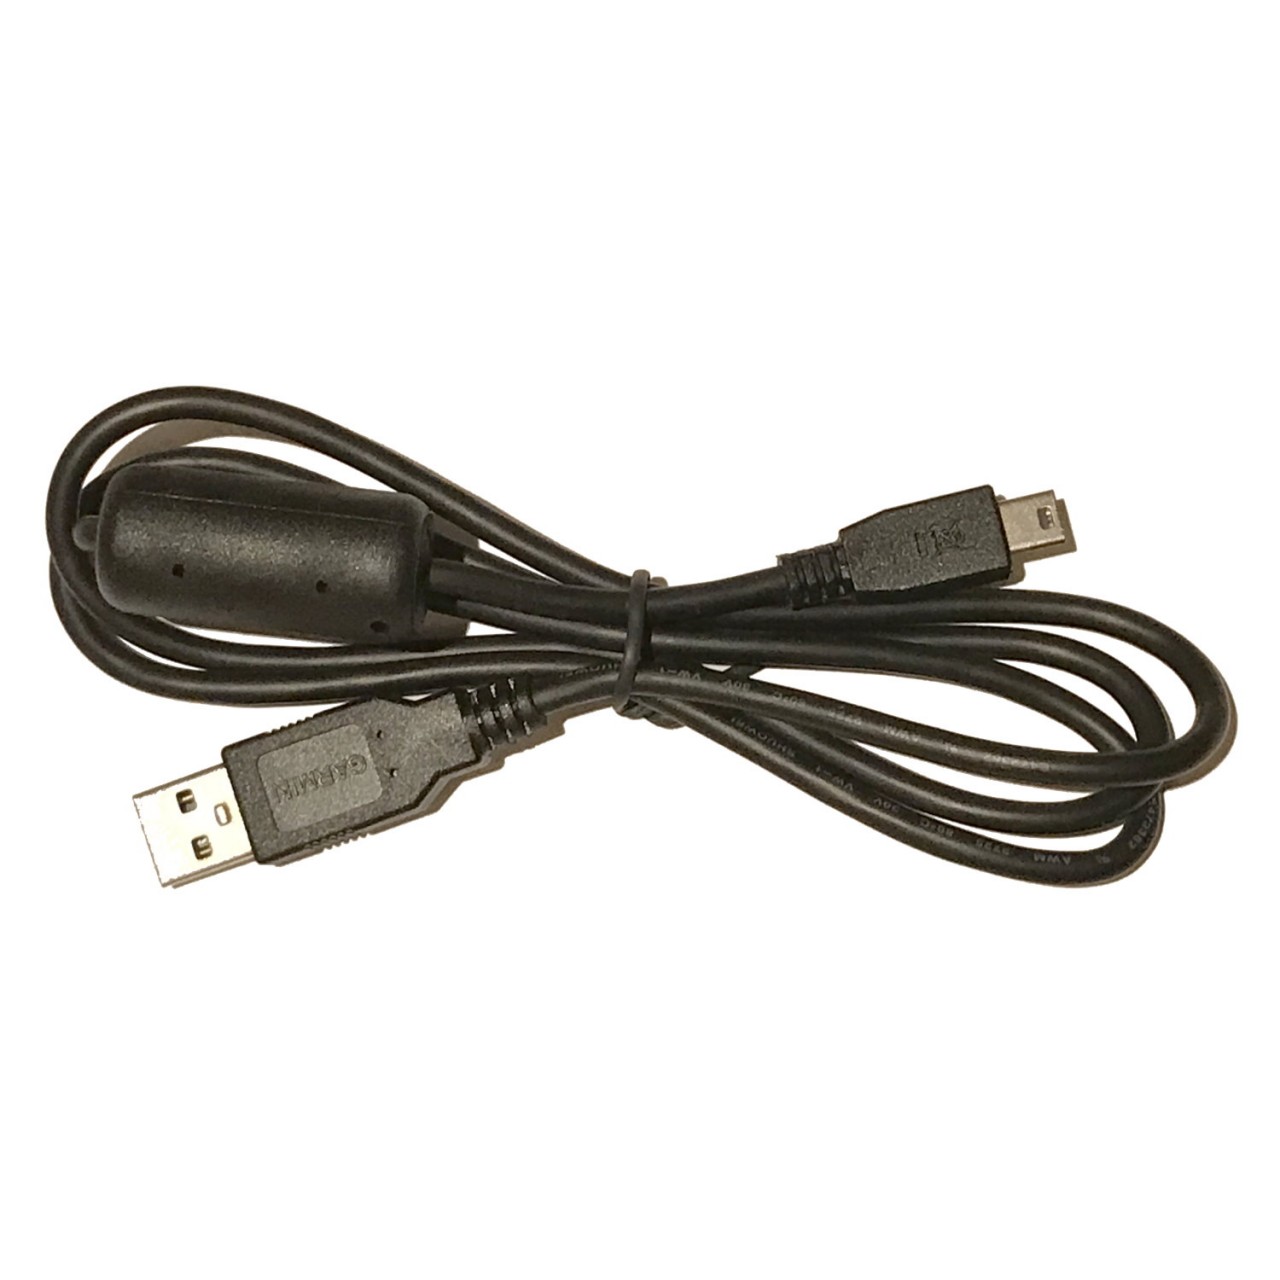 Lys Kilauea Mountain Seaport Garmin USB-kabel f. Garmin nüvi 1310 | Oplader-Batteri.dk